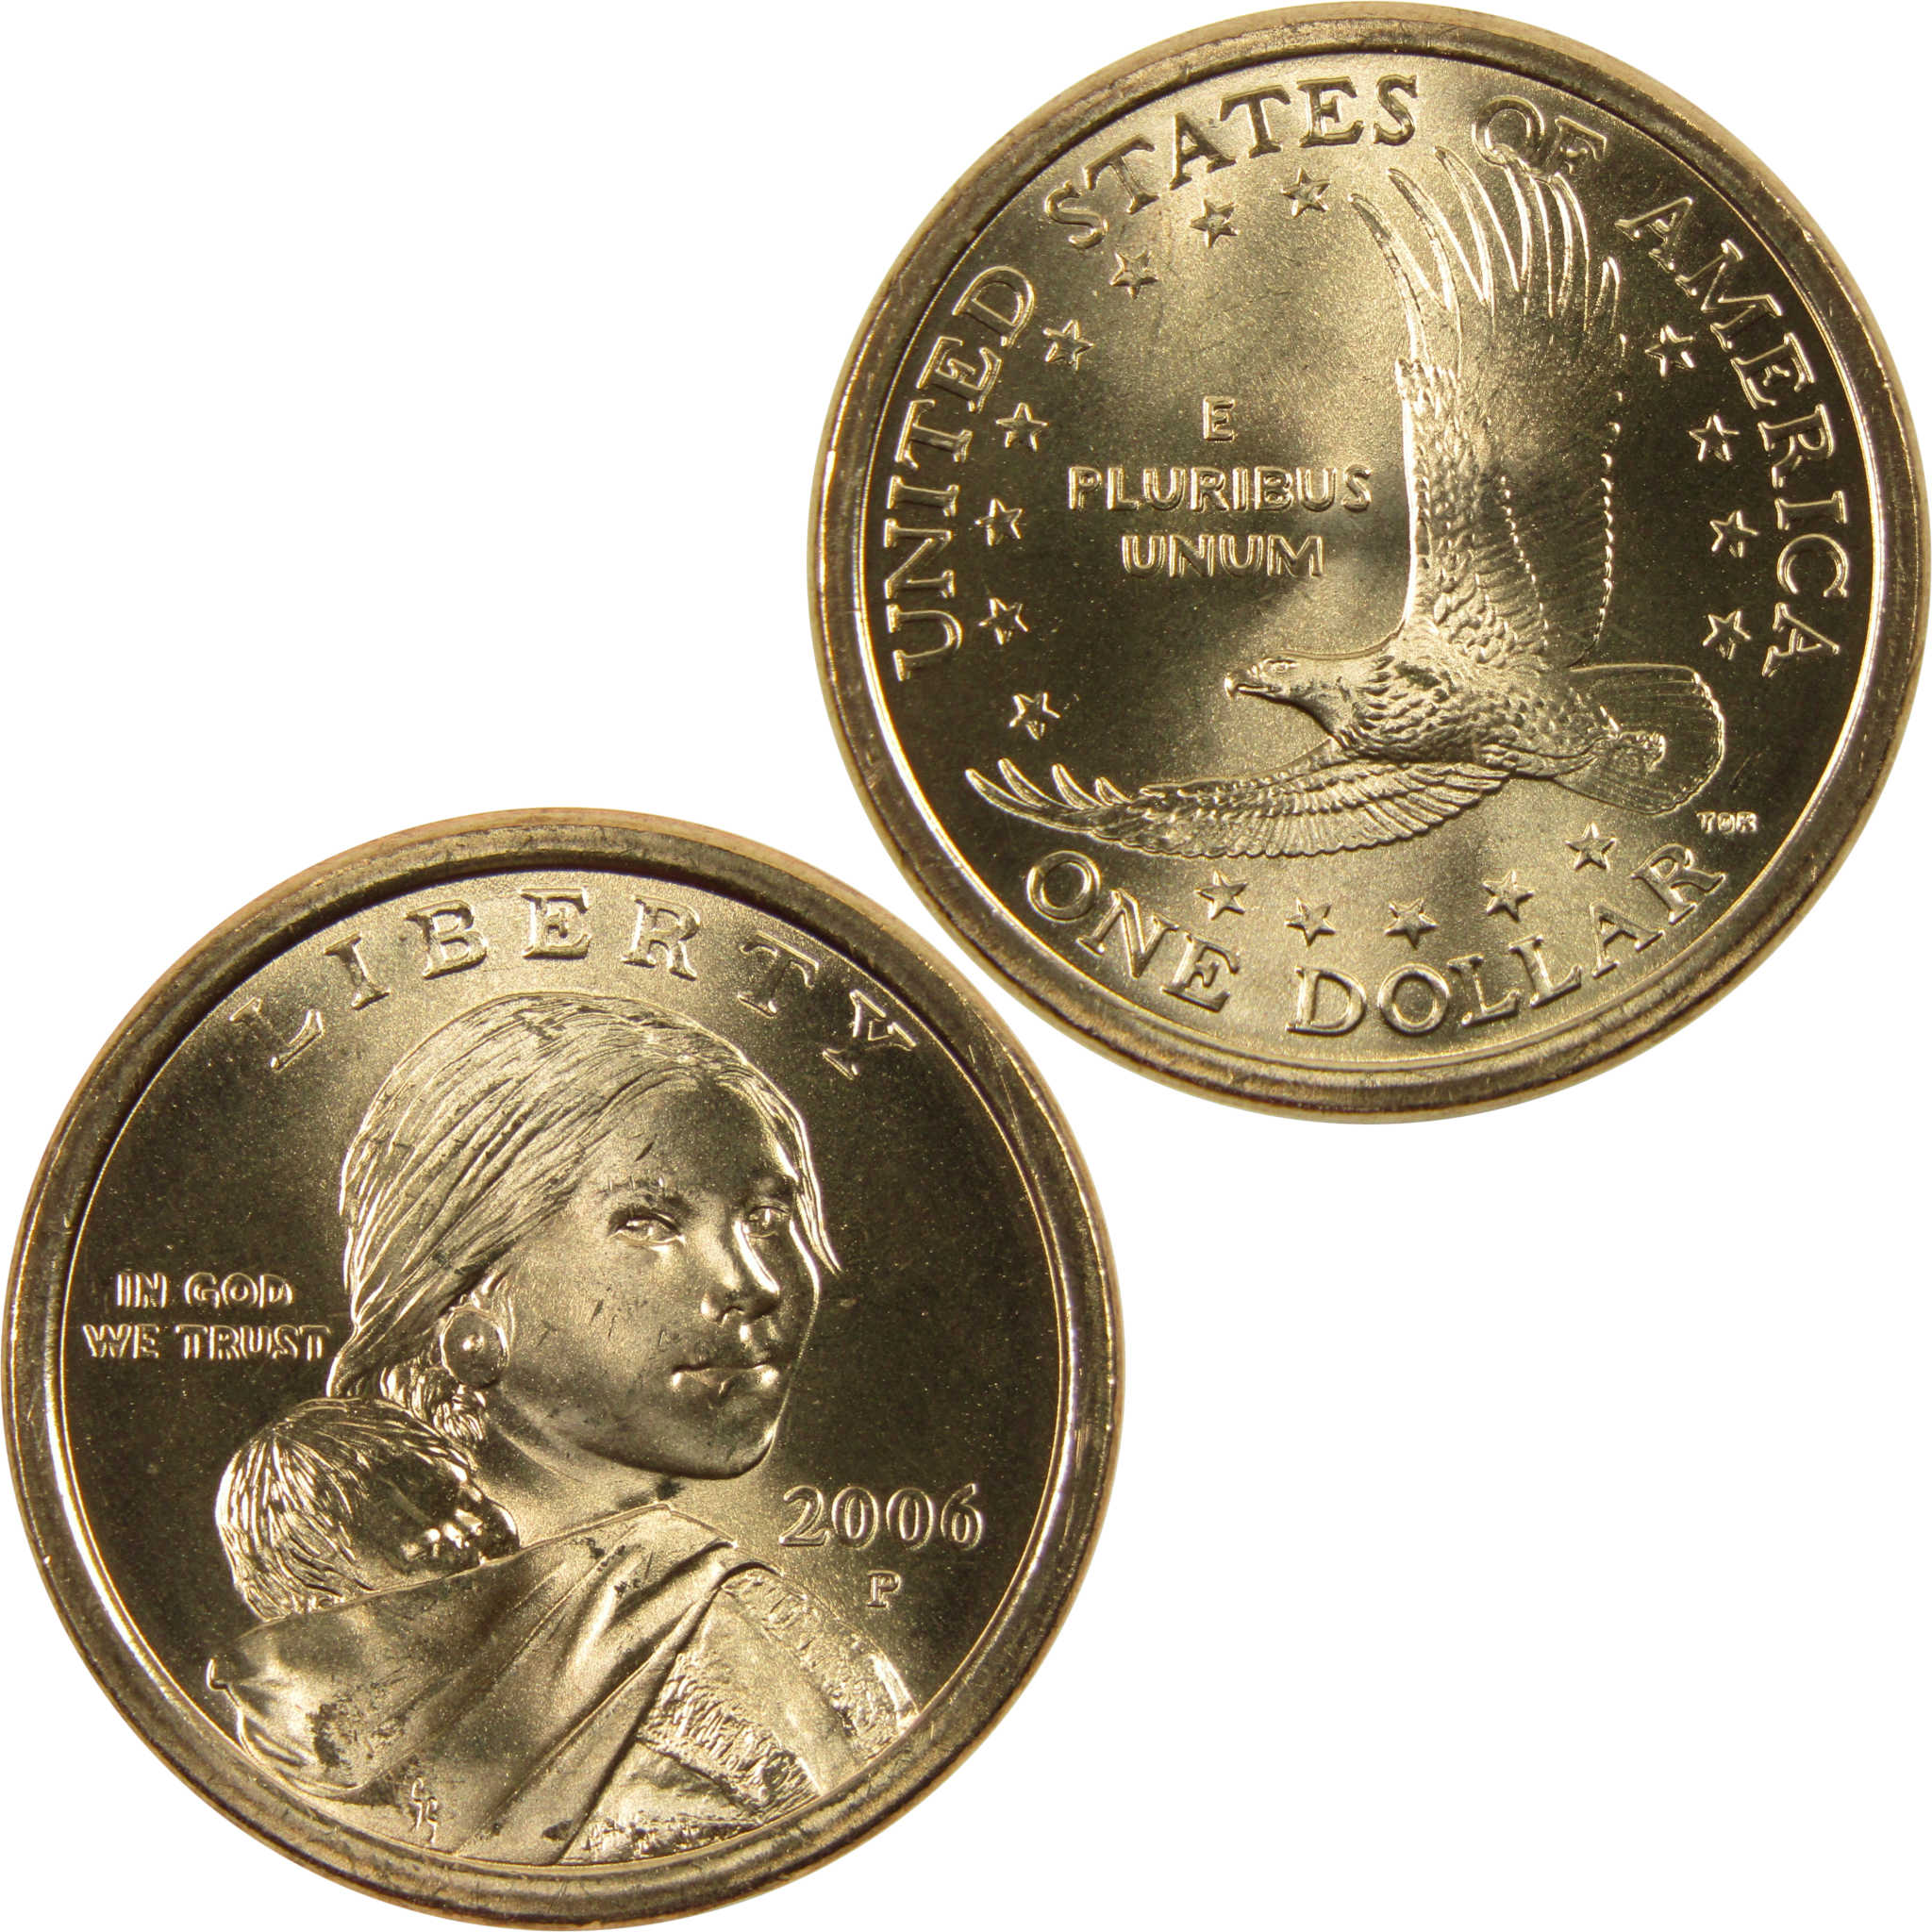 2006 P Sacagawea Native American Dollar BU Uncirculated $1 Coin